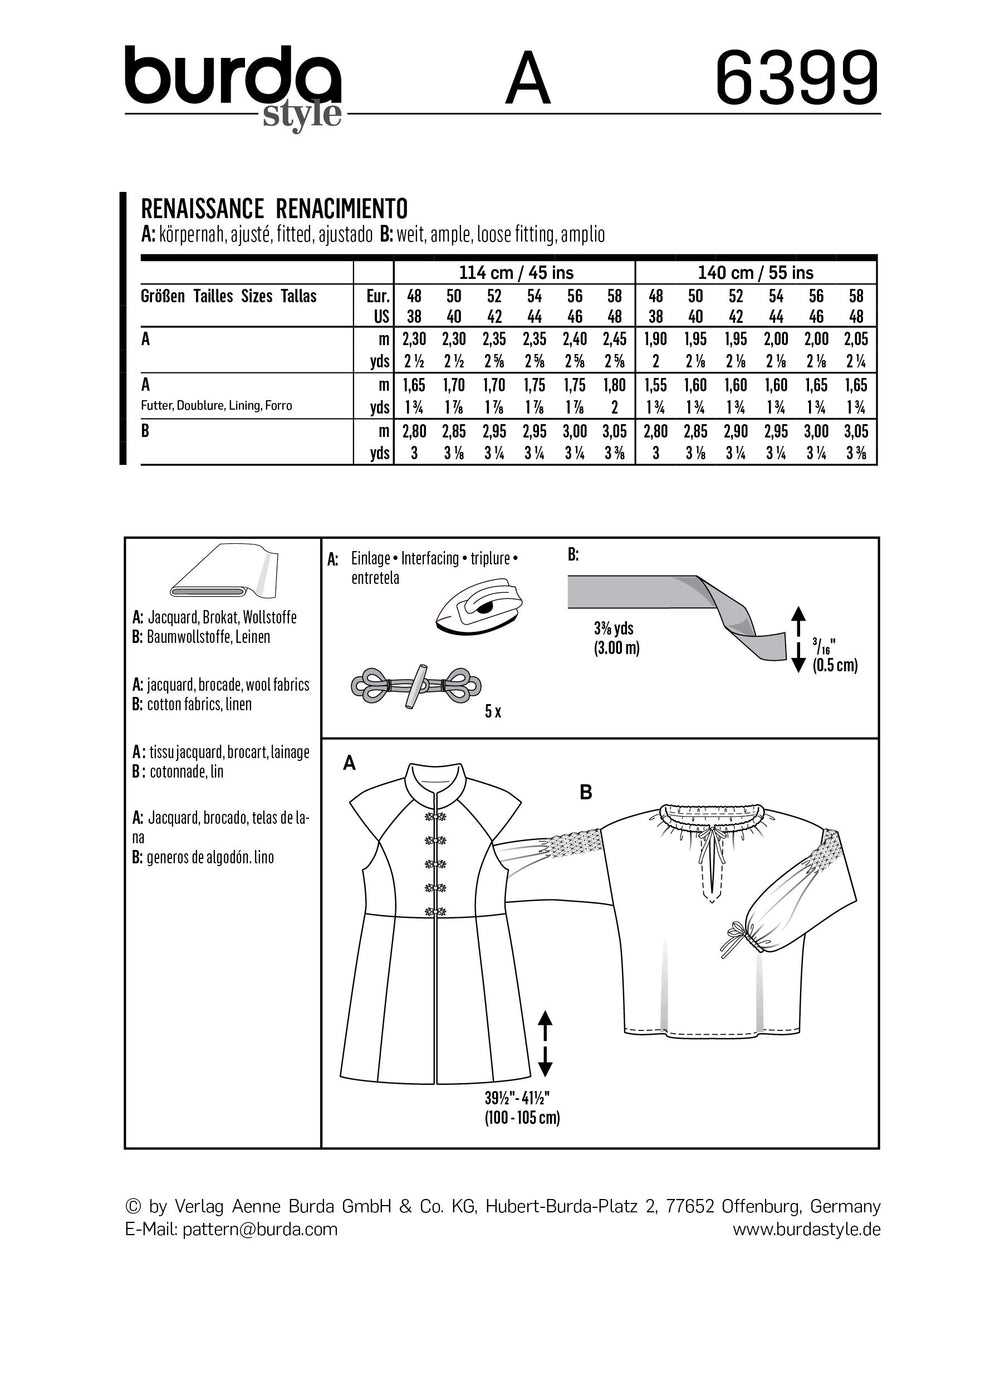 BD6399 Men's Renaissance Shirt from Jaycotts Sewing Supplies